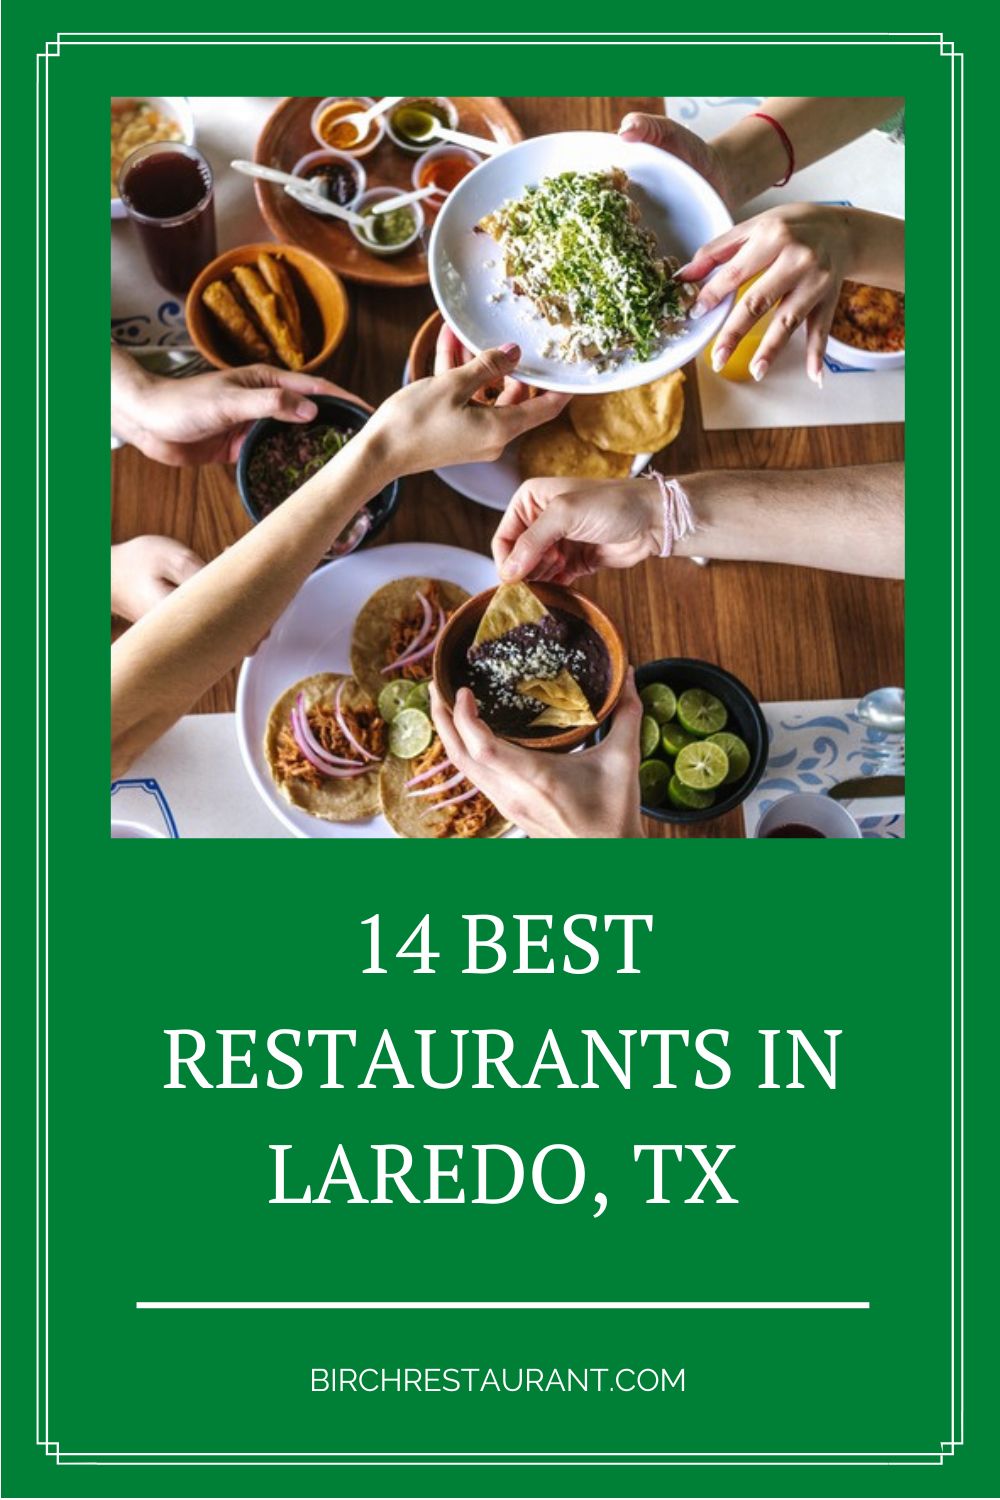 Best Restaurants in Laredo